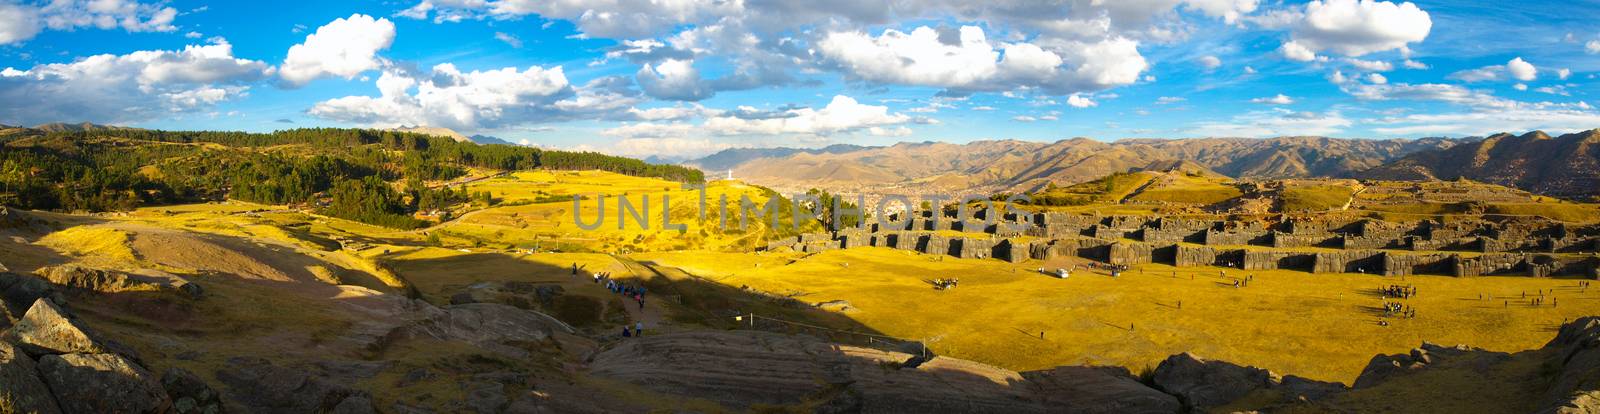 Fort Sacsayhuaman in sunny day, Cuzco, Peru, panorama shot